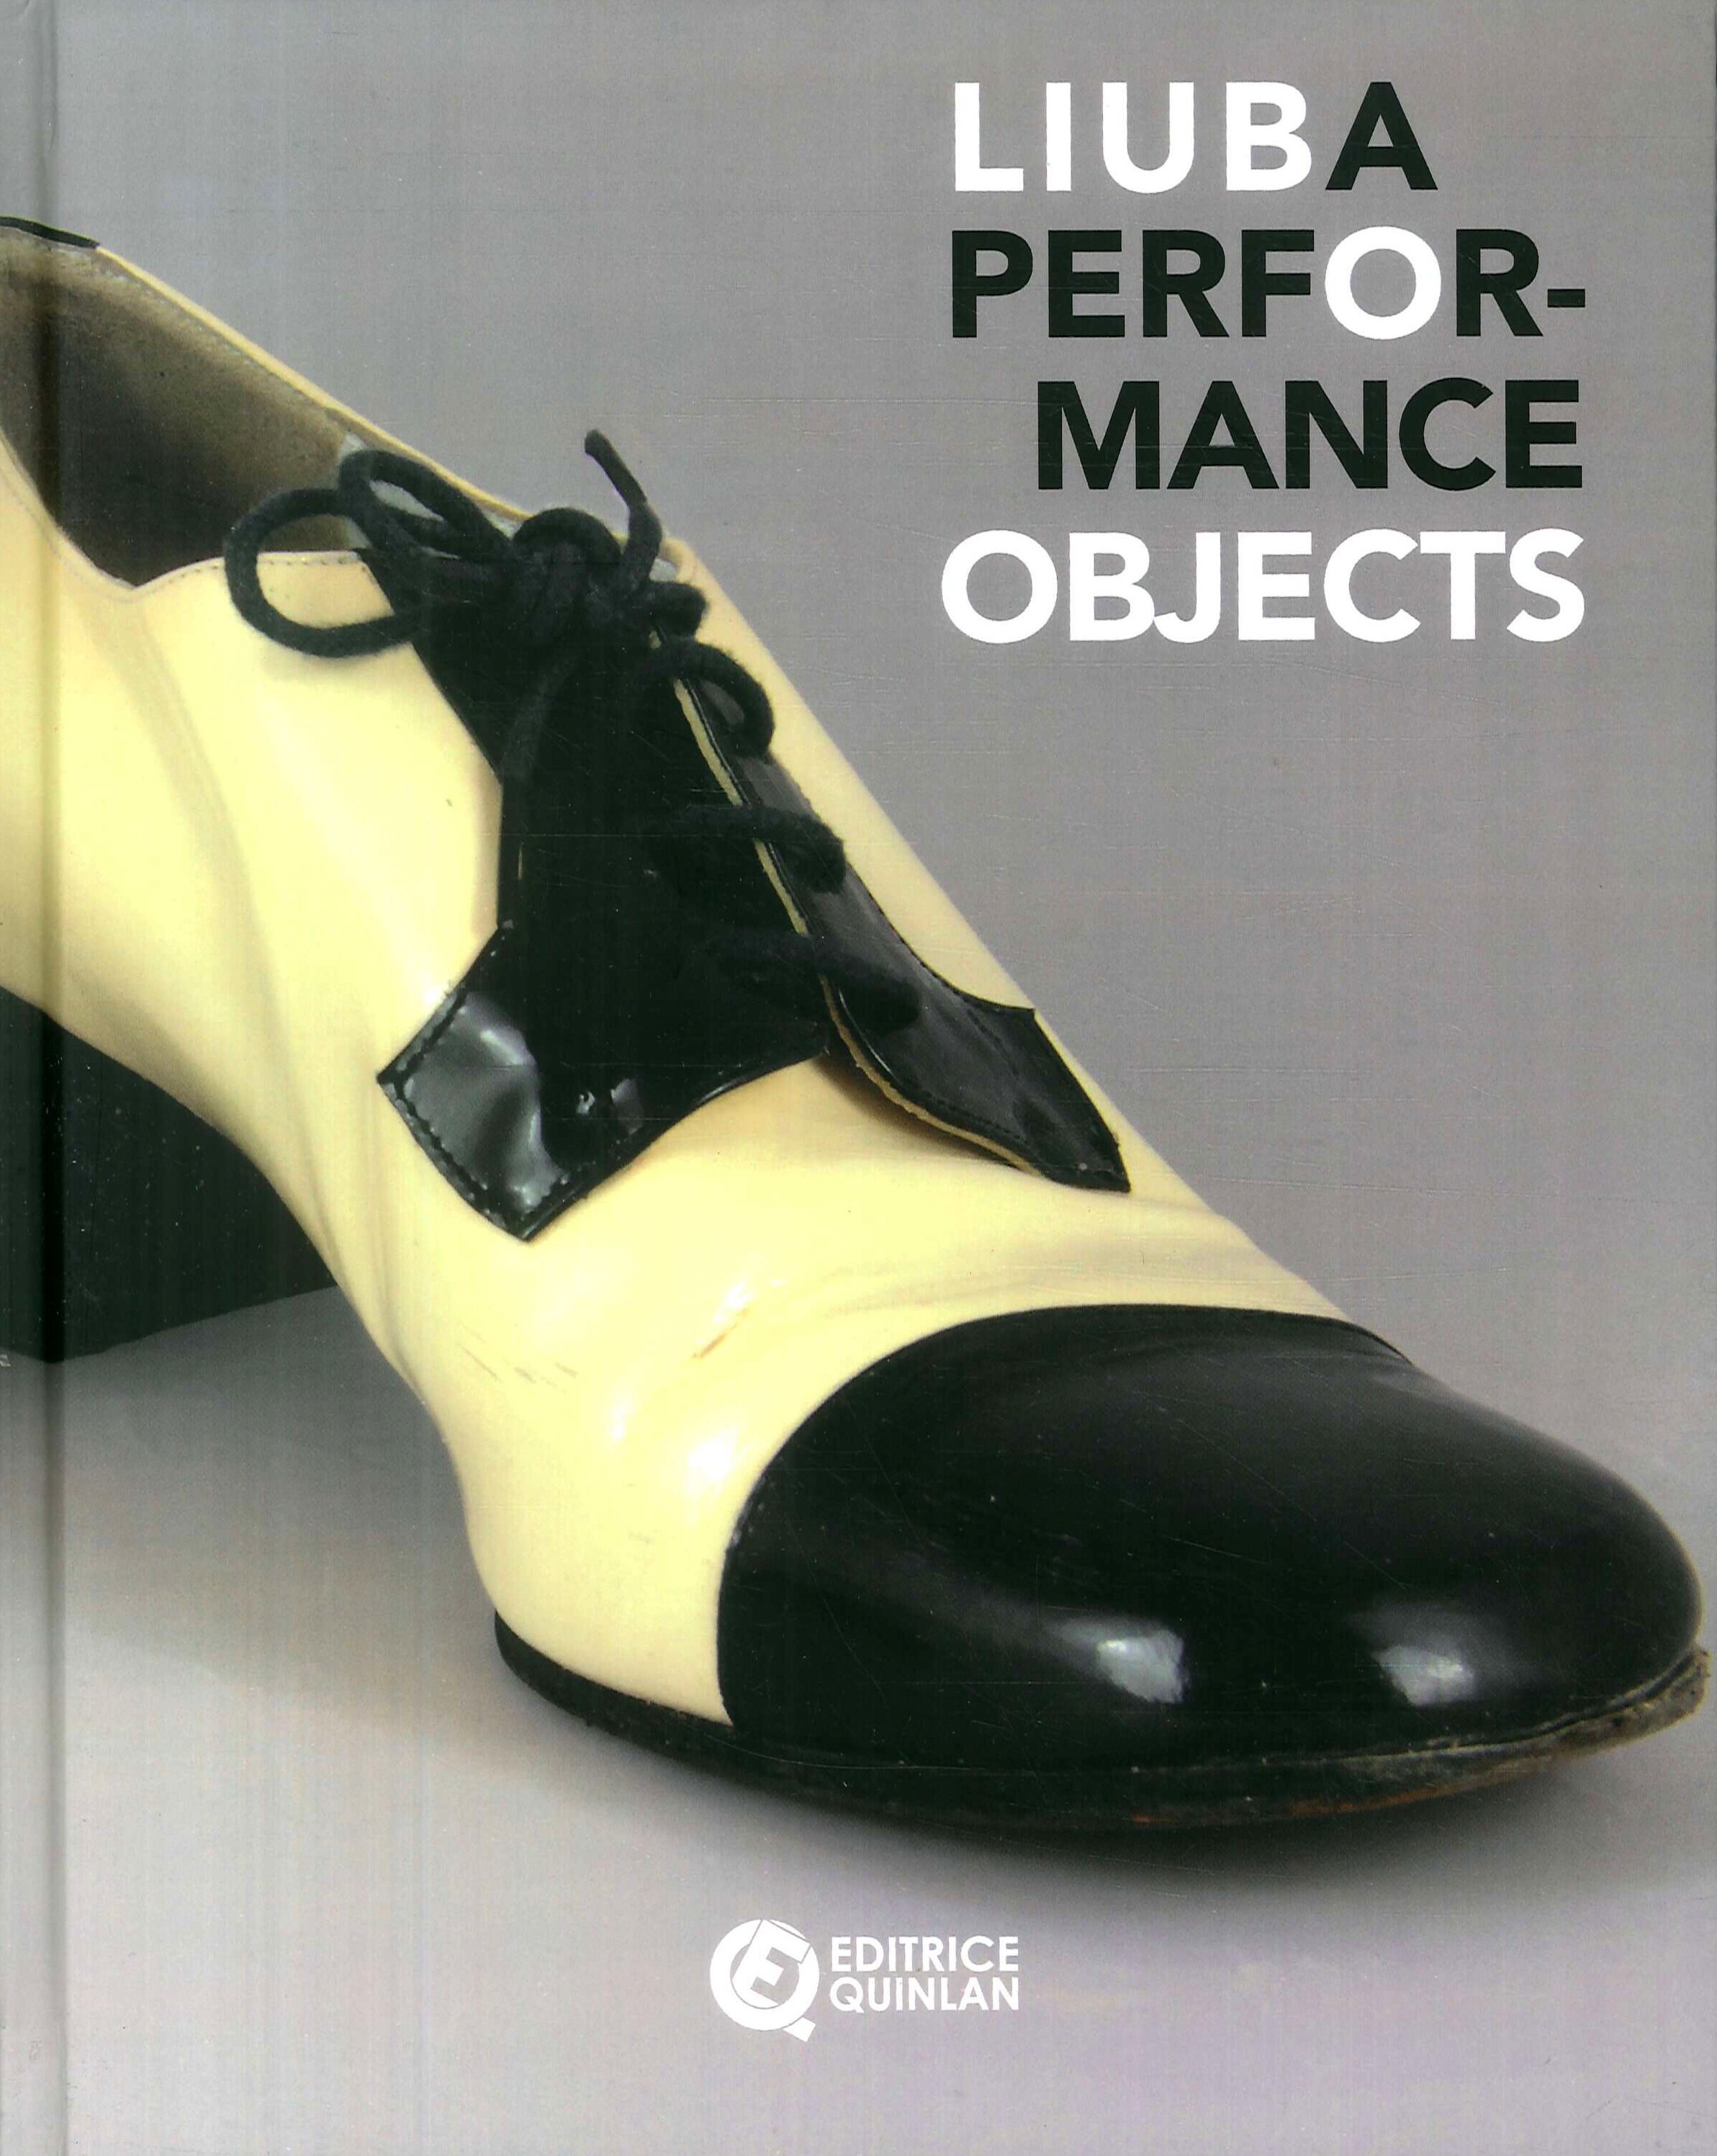 Liuba Performance Objects - [Editrice Quinlan] - Photo 1/1